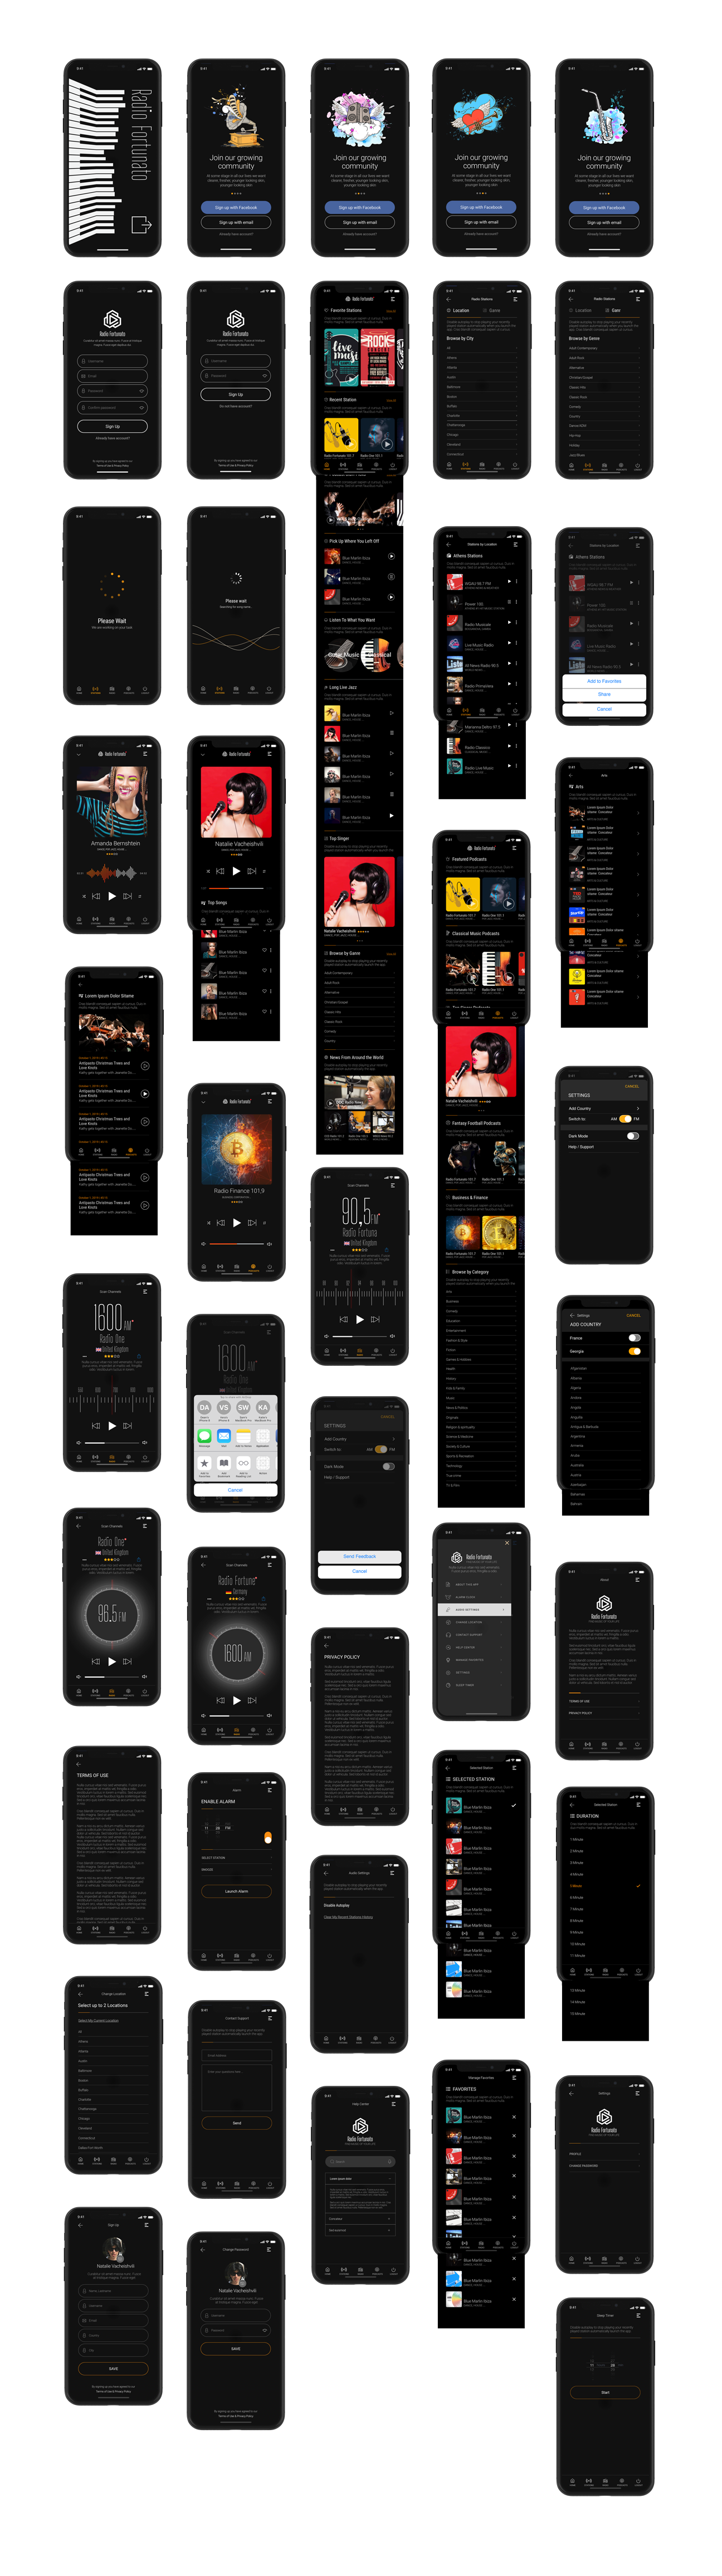 Fortunato - Radio UI Kit for Mobile App - 6